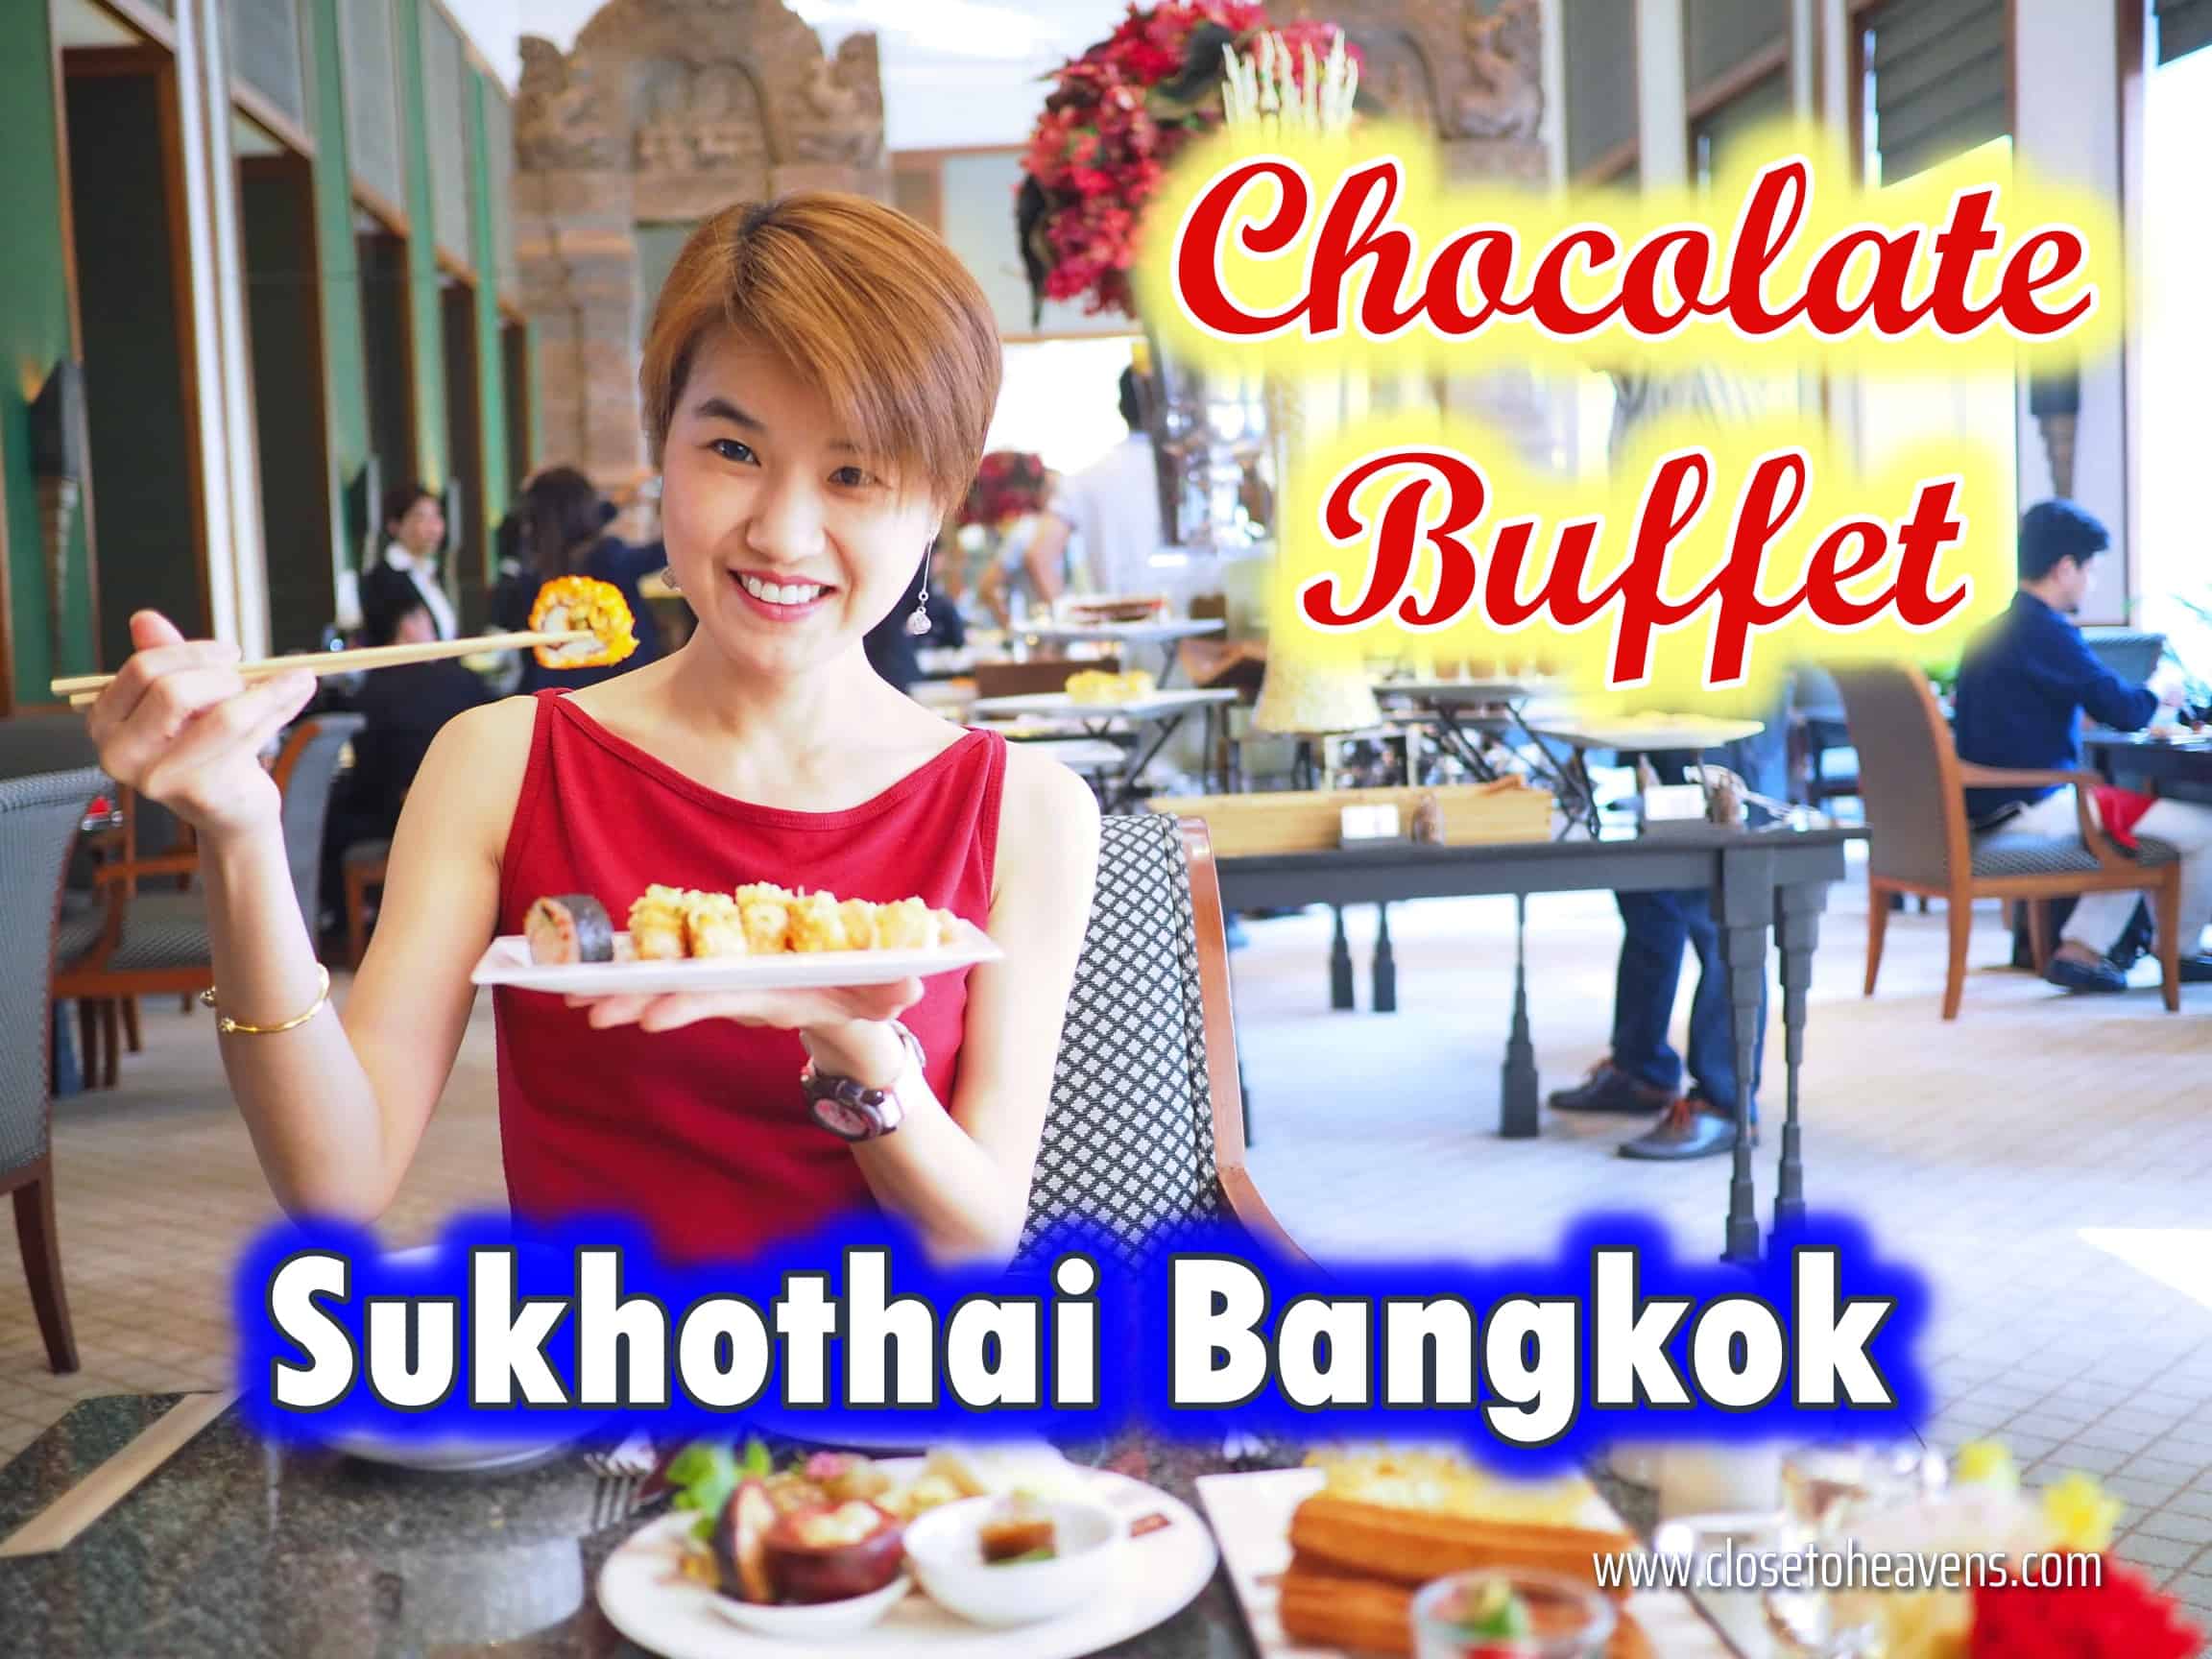 Chocolate Buffet @ The Sukhothai Bangkok ไม่ได้มีดีแค่ช็อคโกแลต